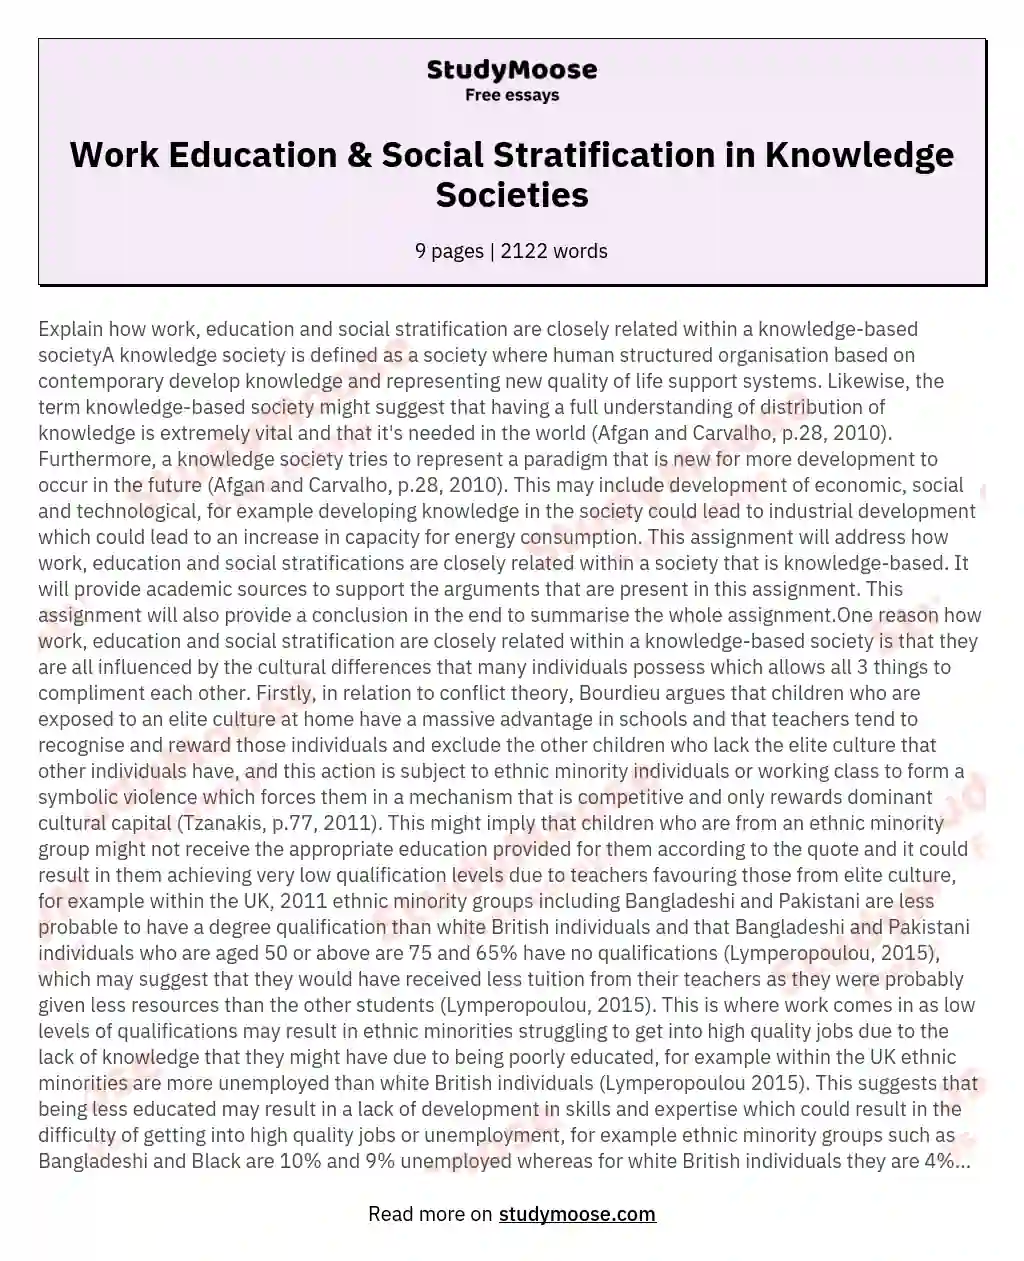 Work Education & Social Stratification in Knowledge Societies essay